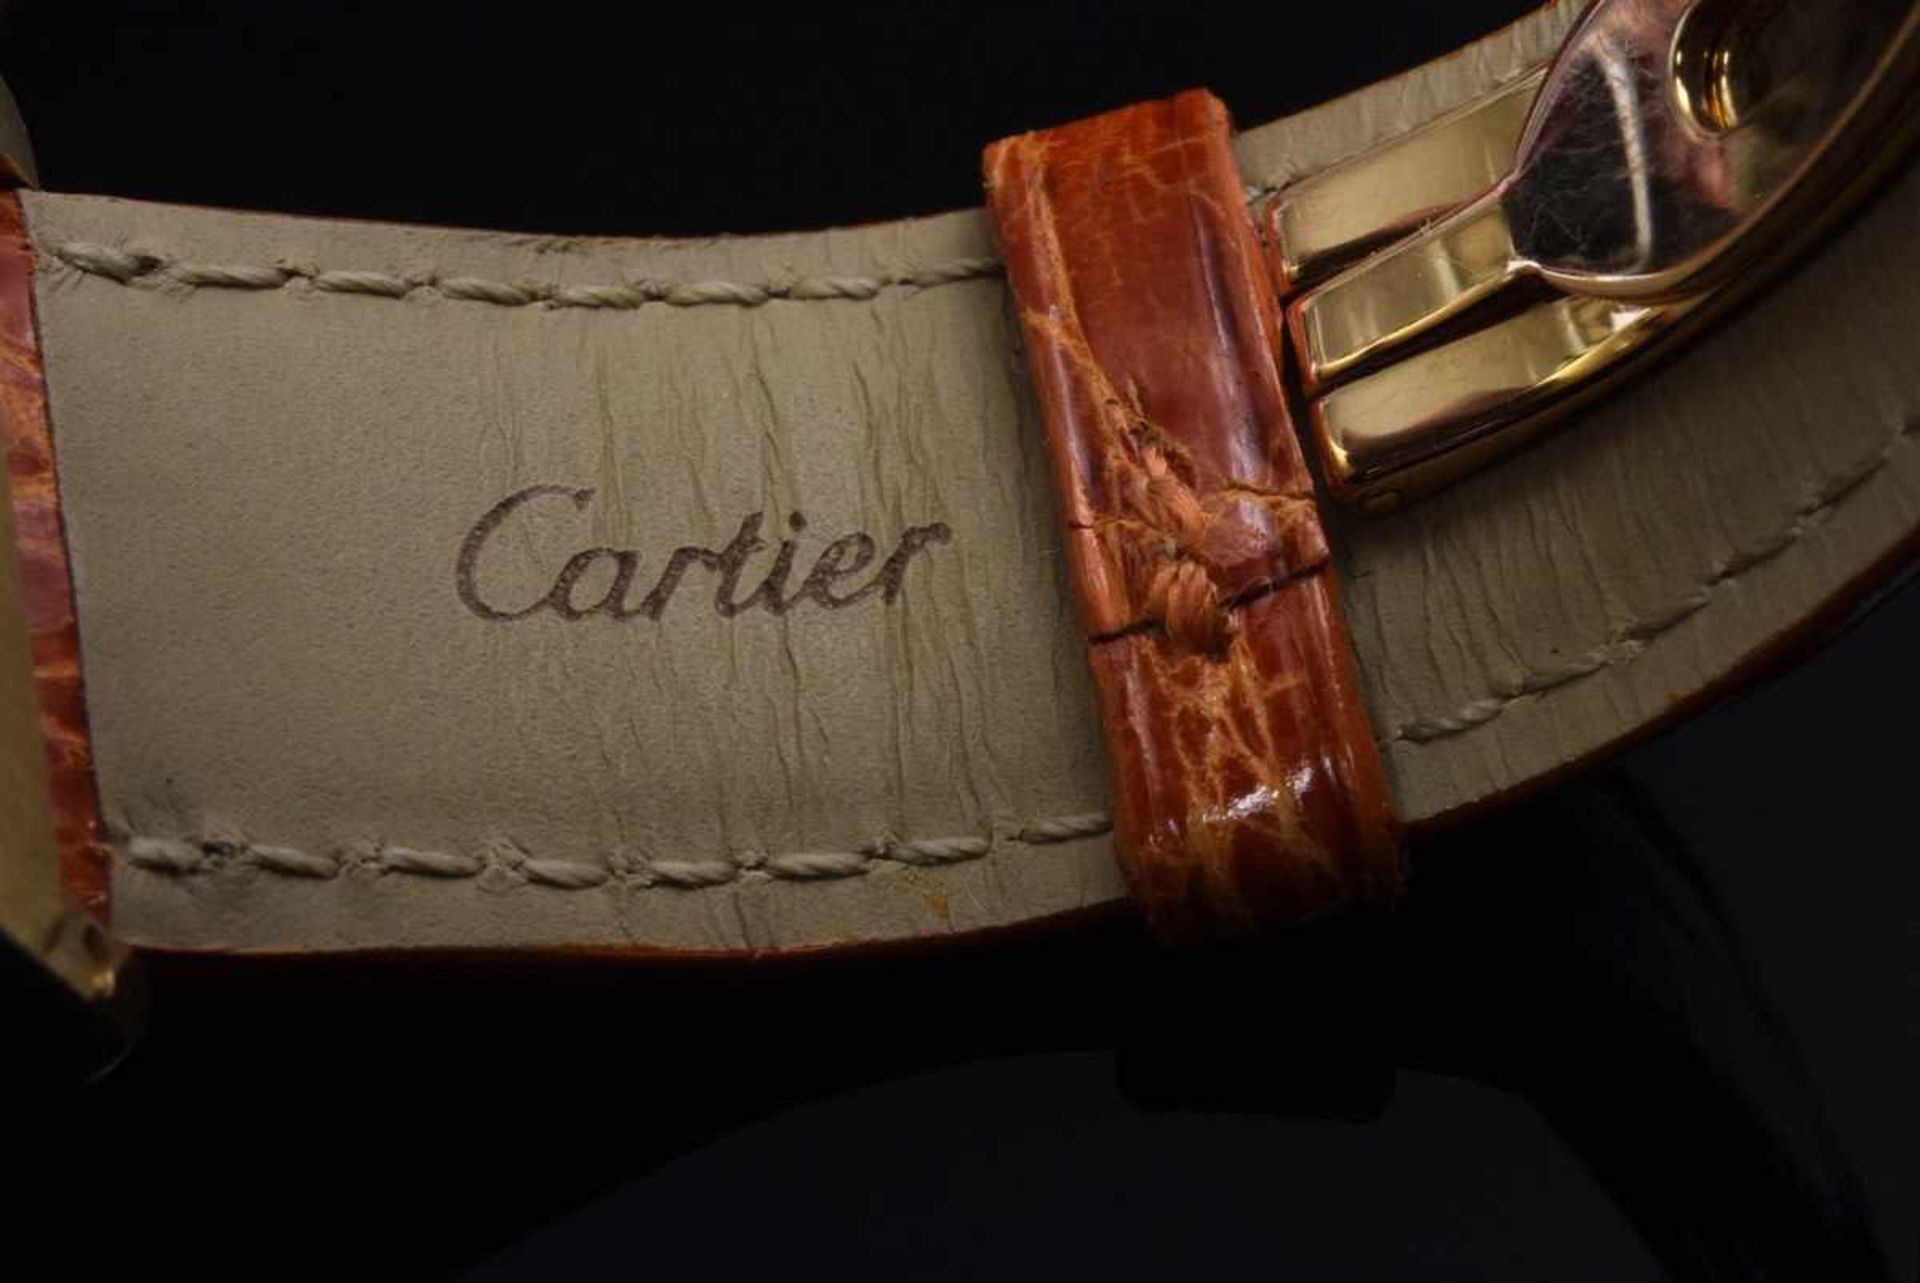 GG 750 Cartier "Tank Louis Cartier "Ladies watch, quartz movement, white dial with roman numerals, - Image 4 of 7